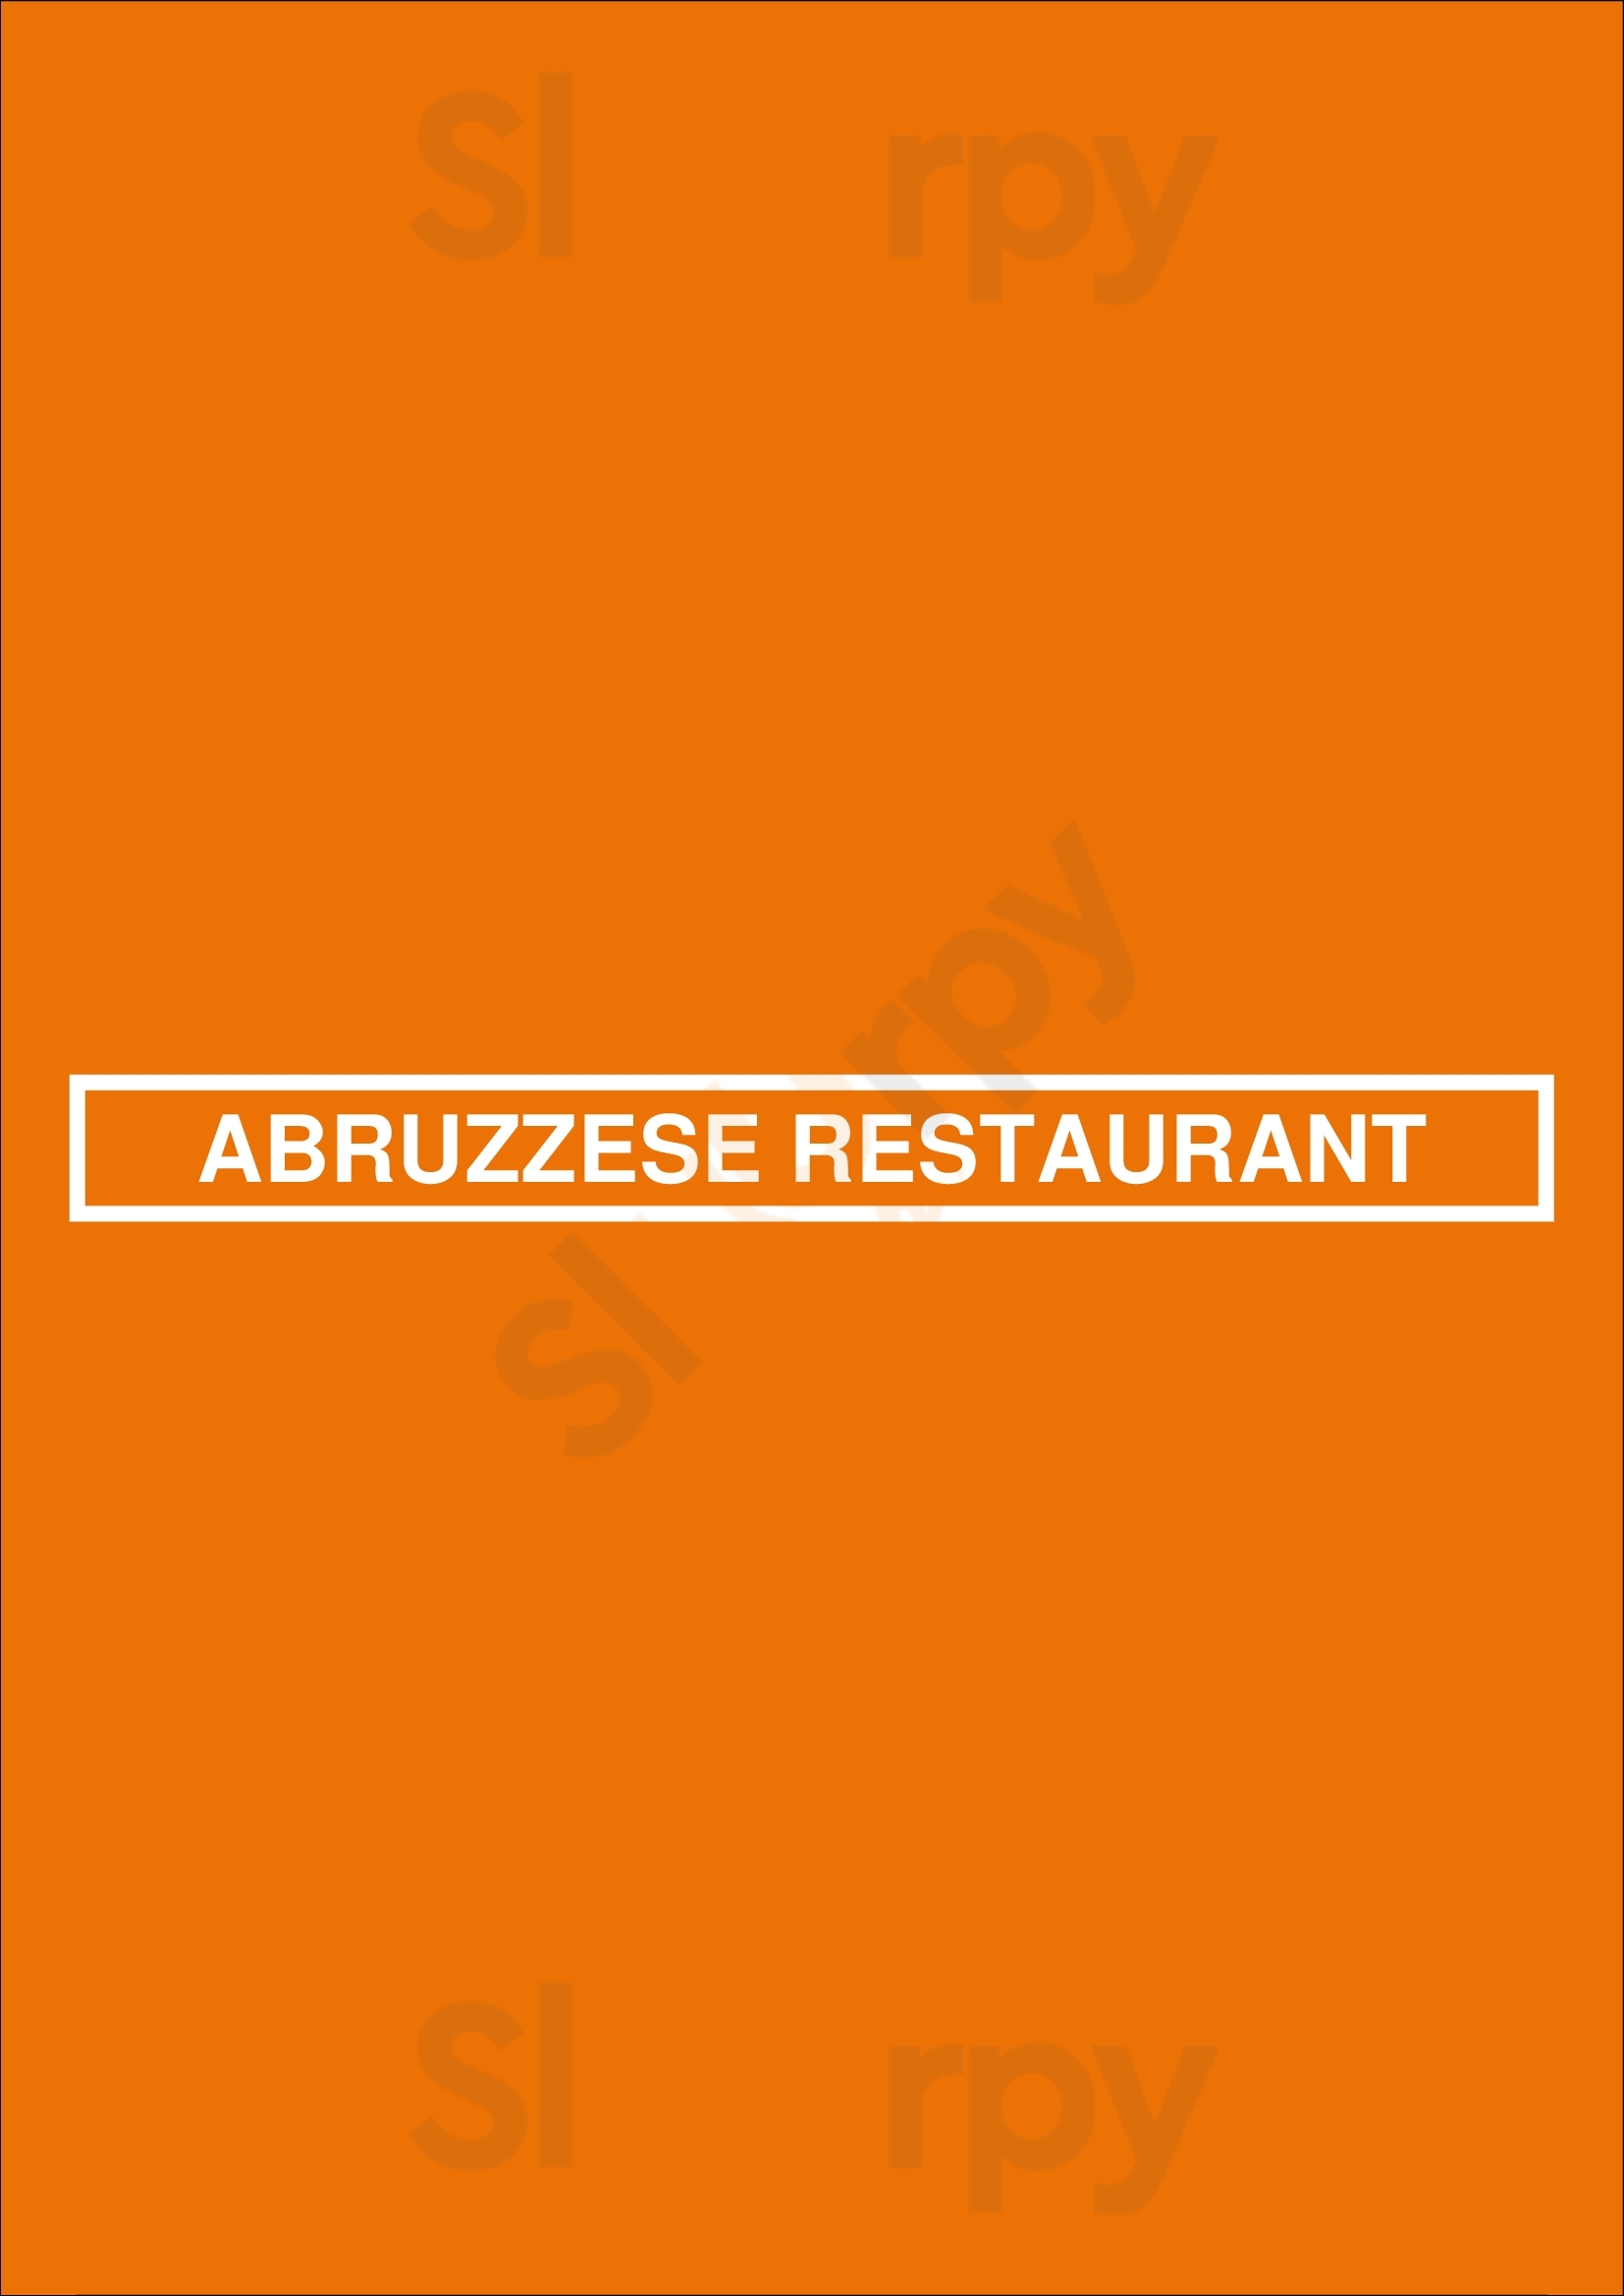 Restaurant Abruzzese La Plata Menu - 1